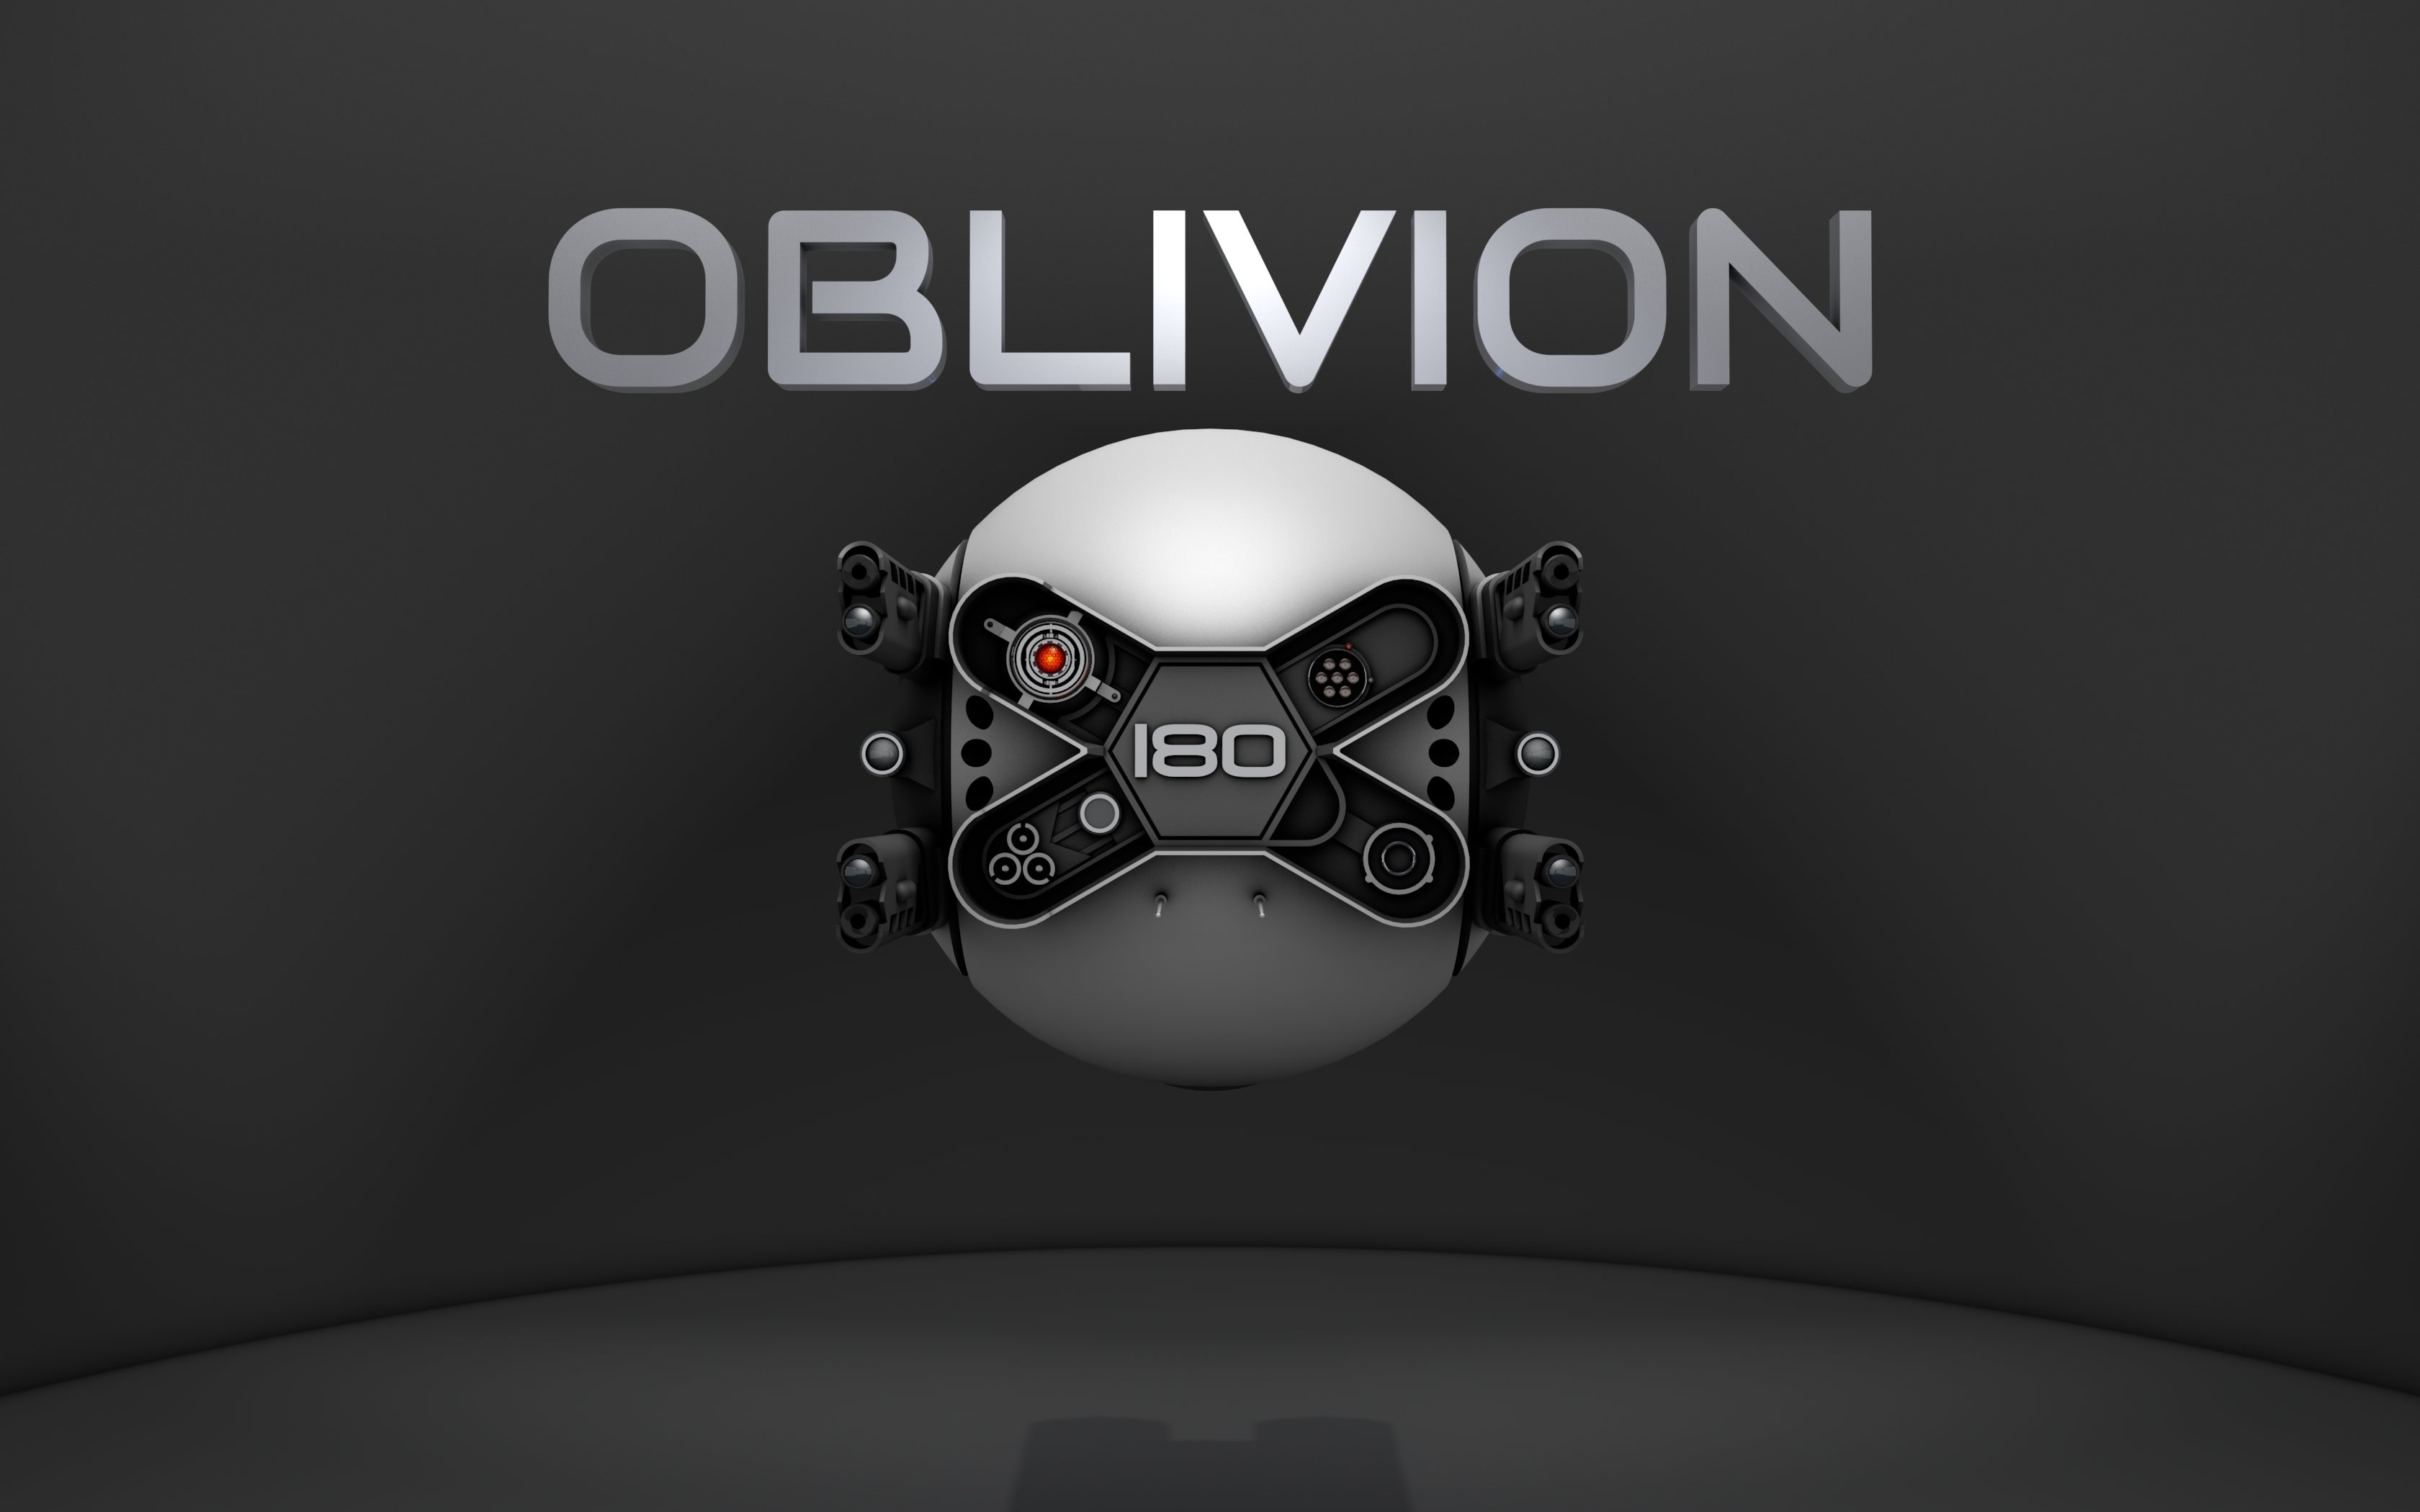 oblivion, Sci fi, Futuristic, Cruise, Science, Technics, Action, Fighting, 1oblivion, Apocalyptic Wallpaper